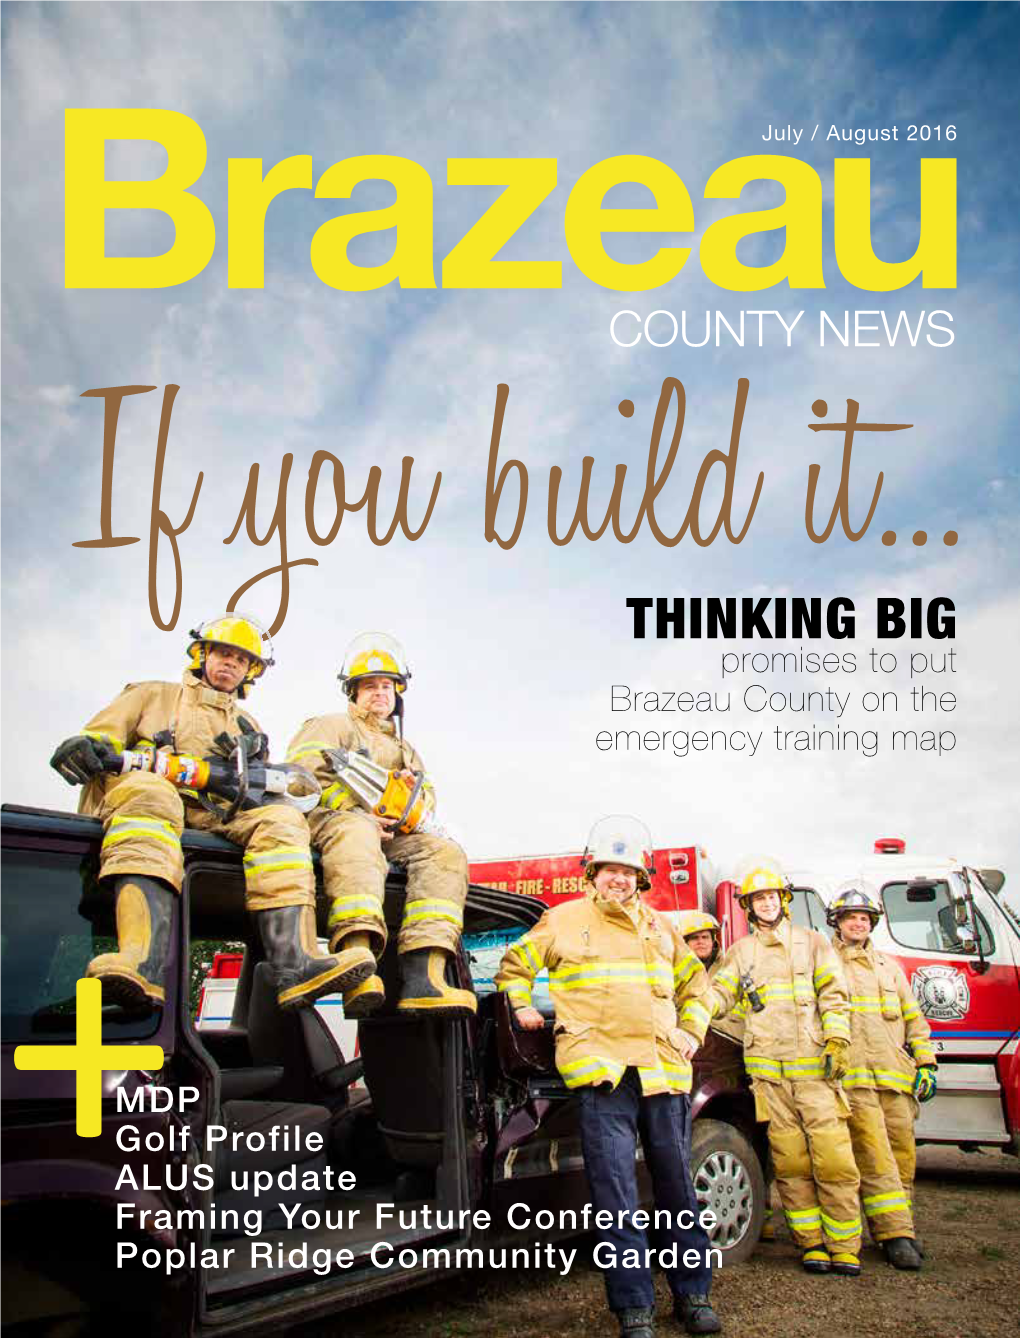 THINKING BIG Promises to Put Brazeau County on the Emergency Training Map